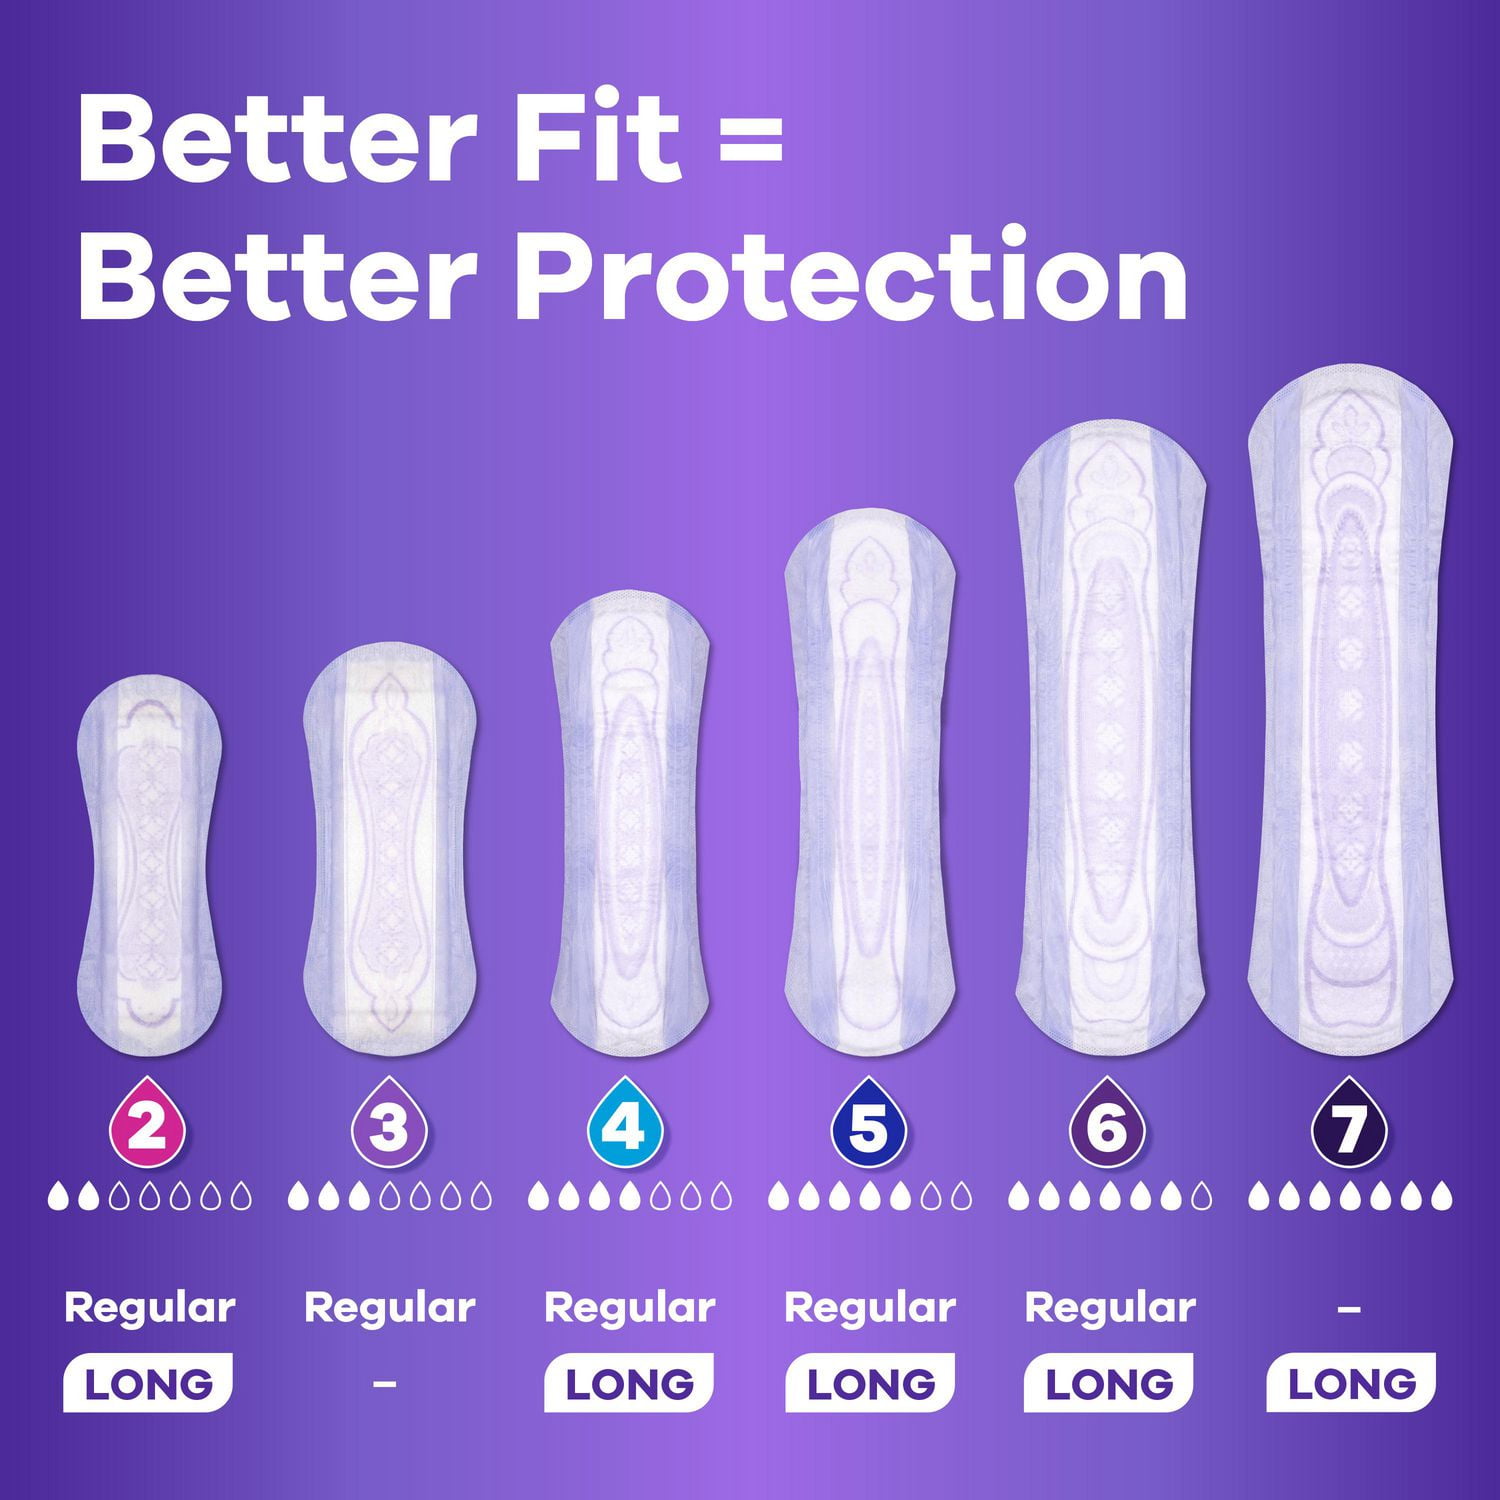 3pcs Pee Proof Panties, Incontinence, Adult Diapers Alternative, Small,  Medium, Large, Plus Size Underwear, Leak Proof